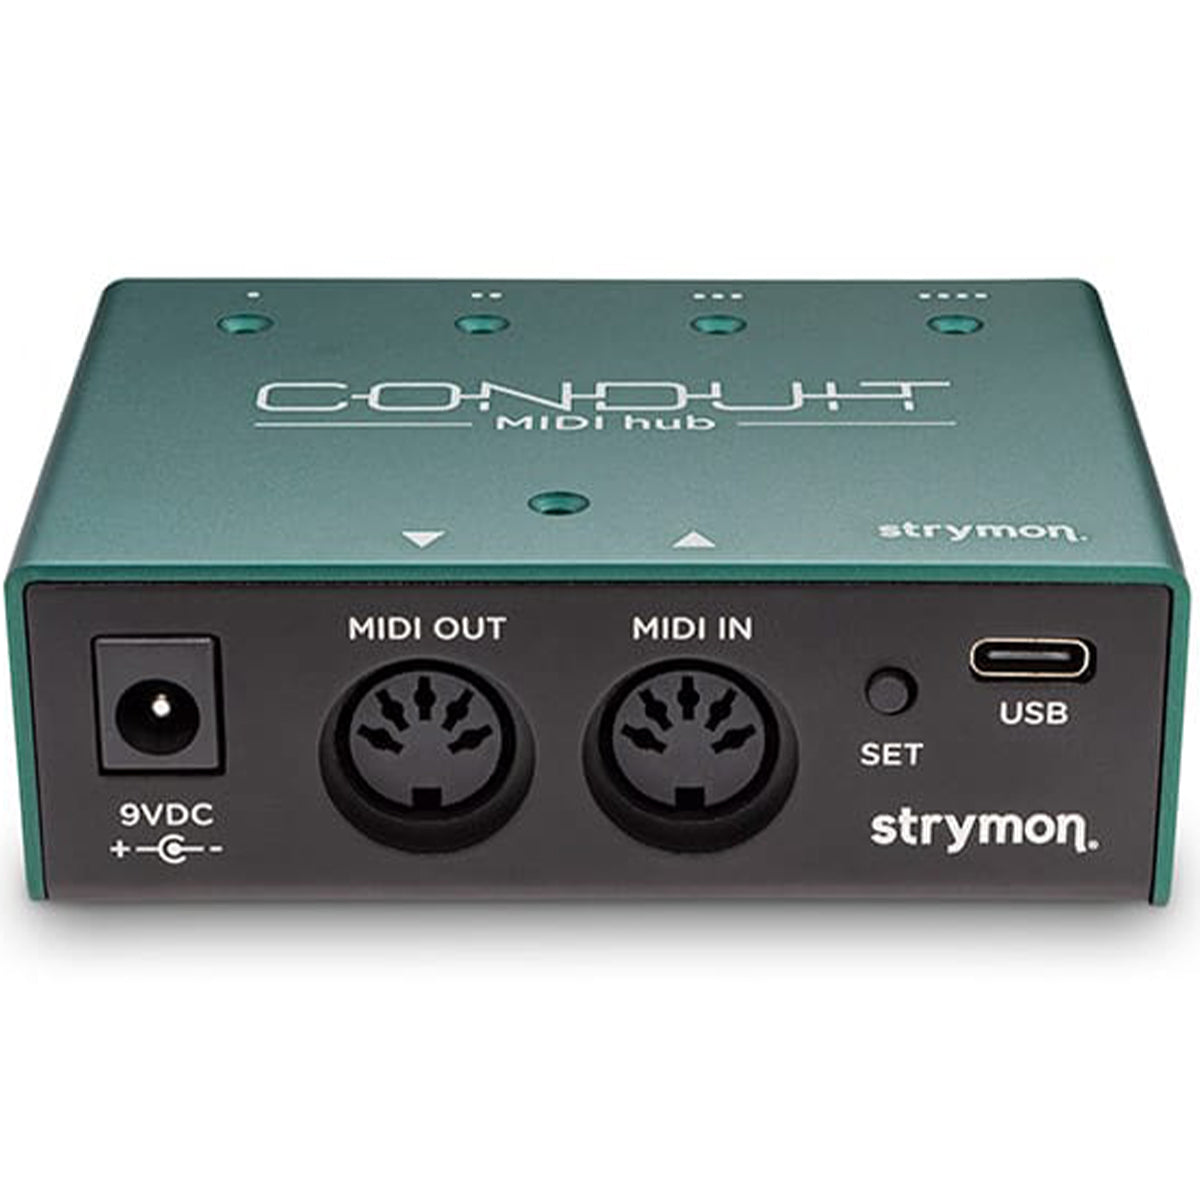 Strymon Conduit MIDI Hub Interface